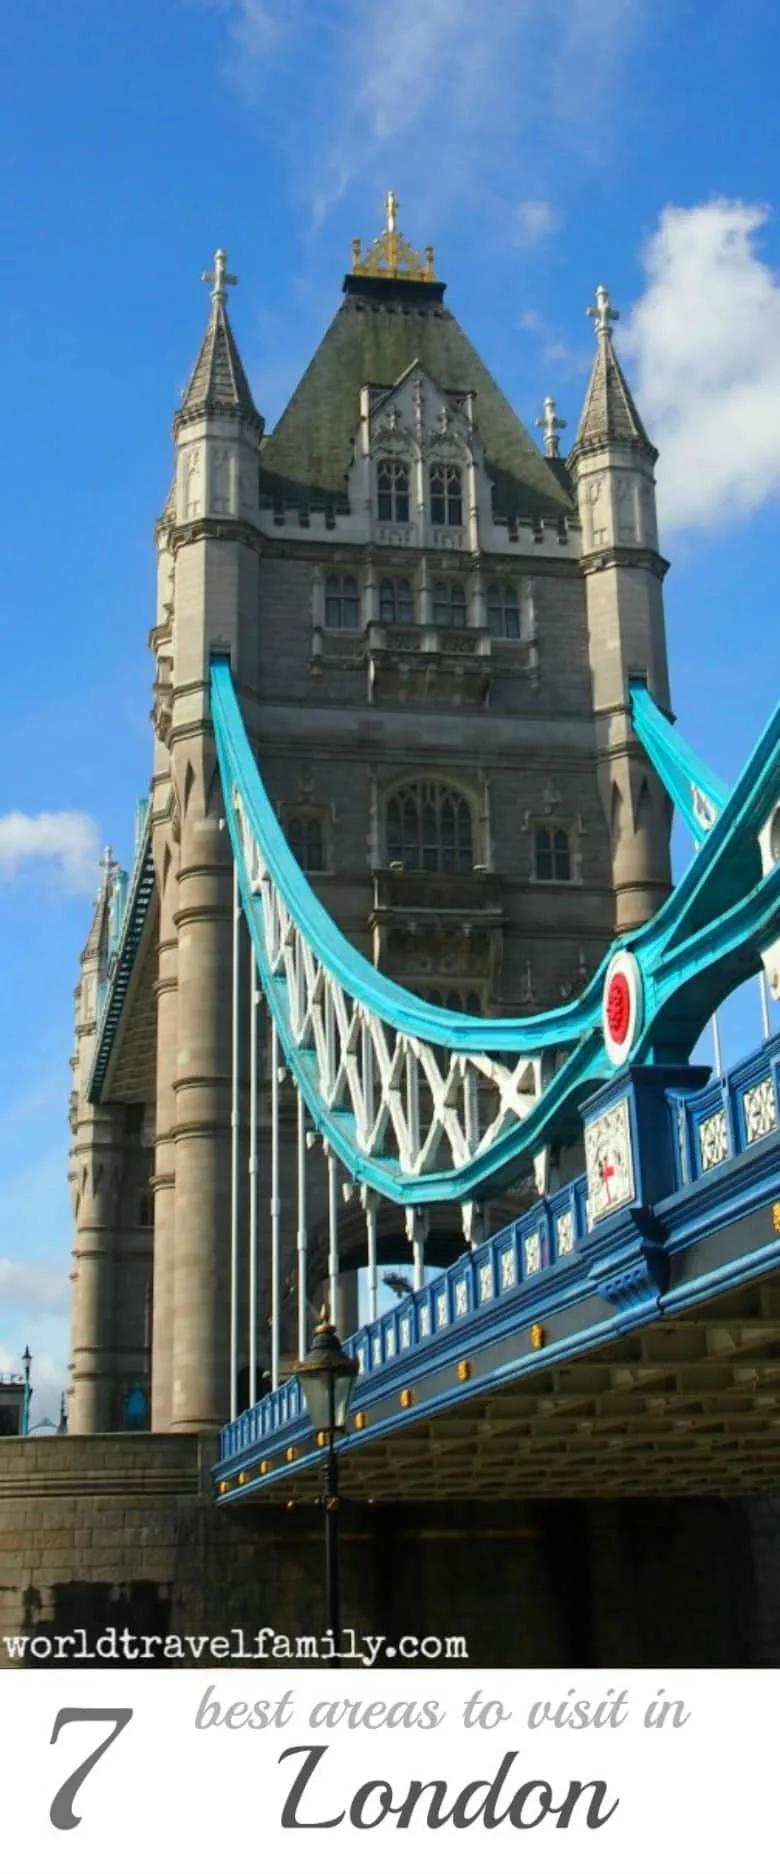 Tower Bridge 7 best areas to visit in London